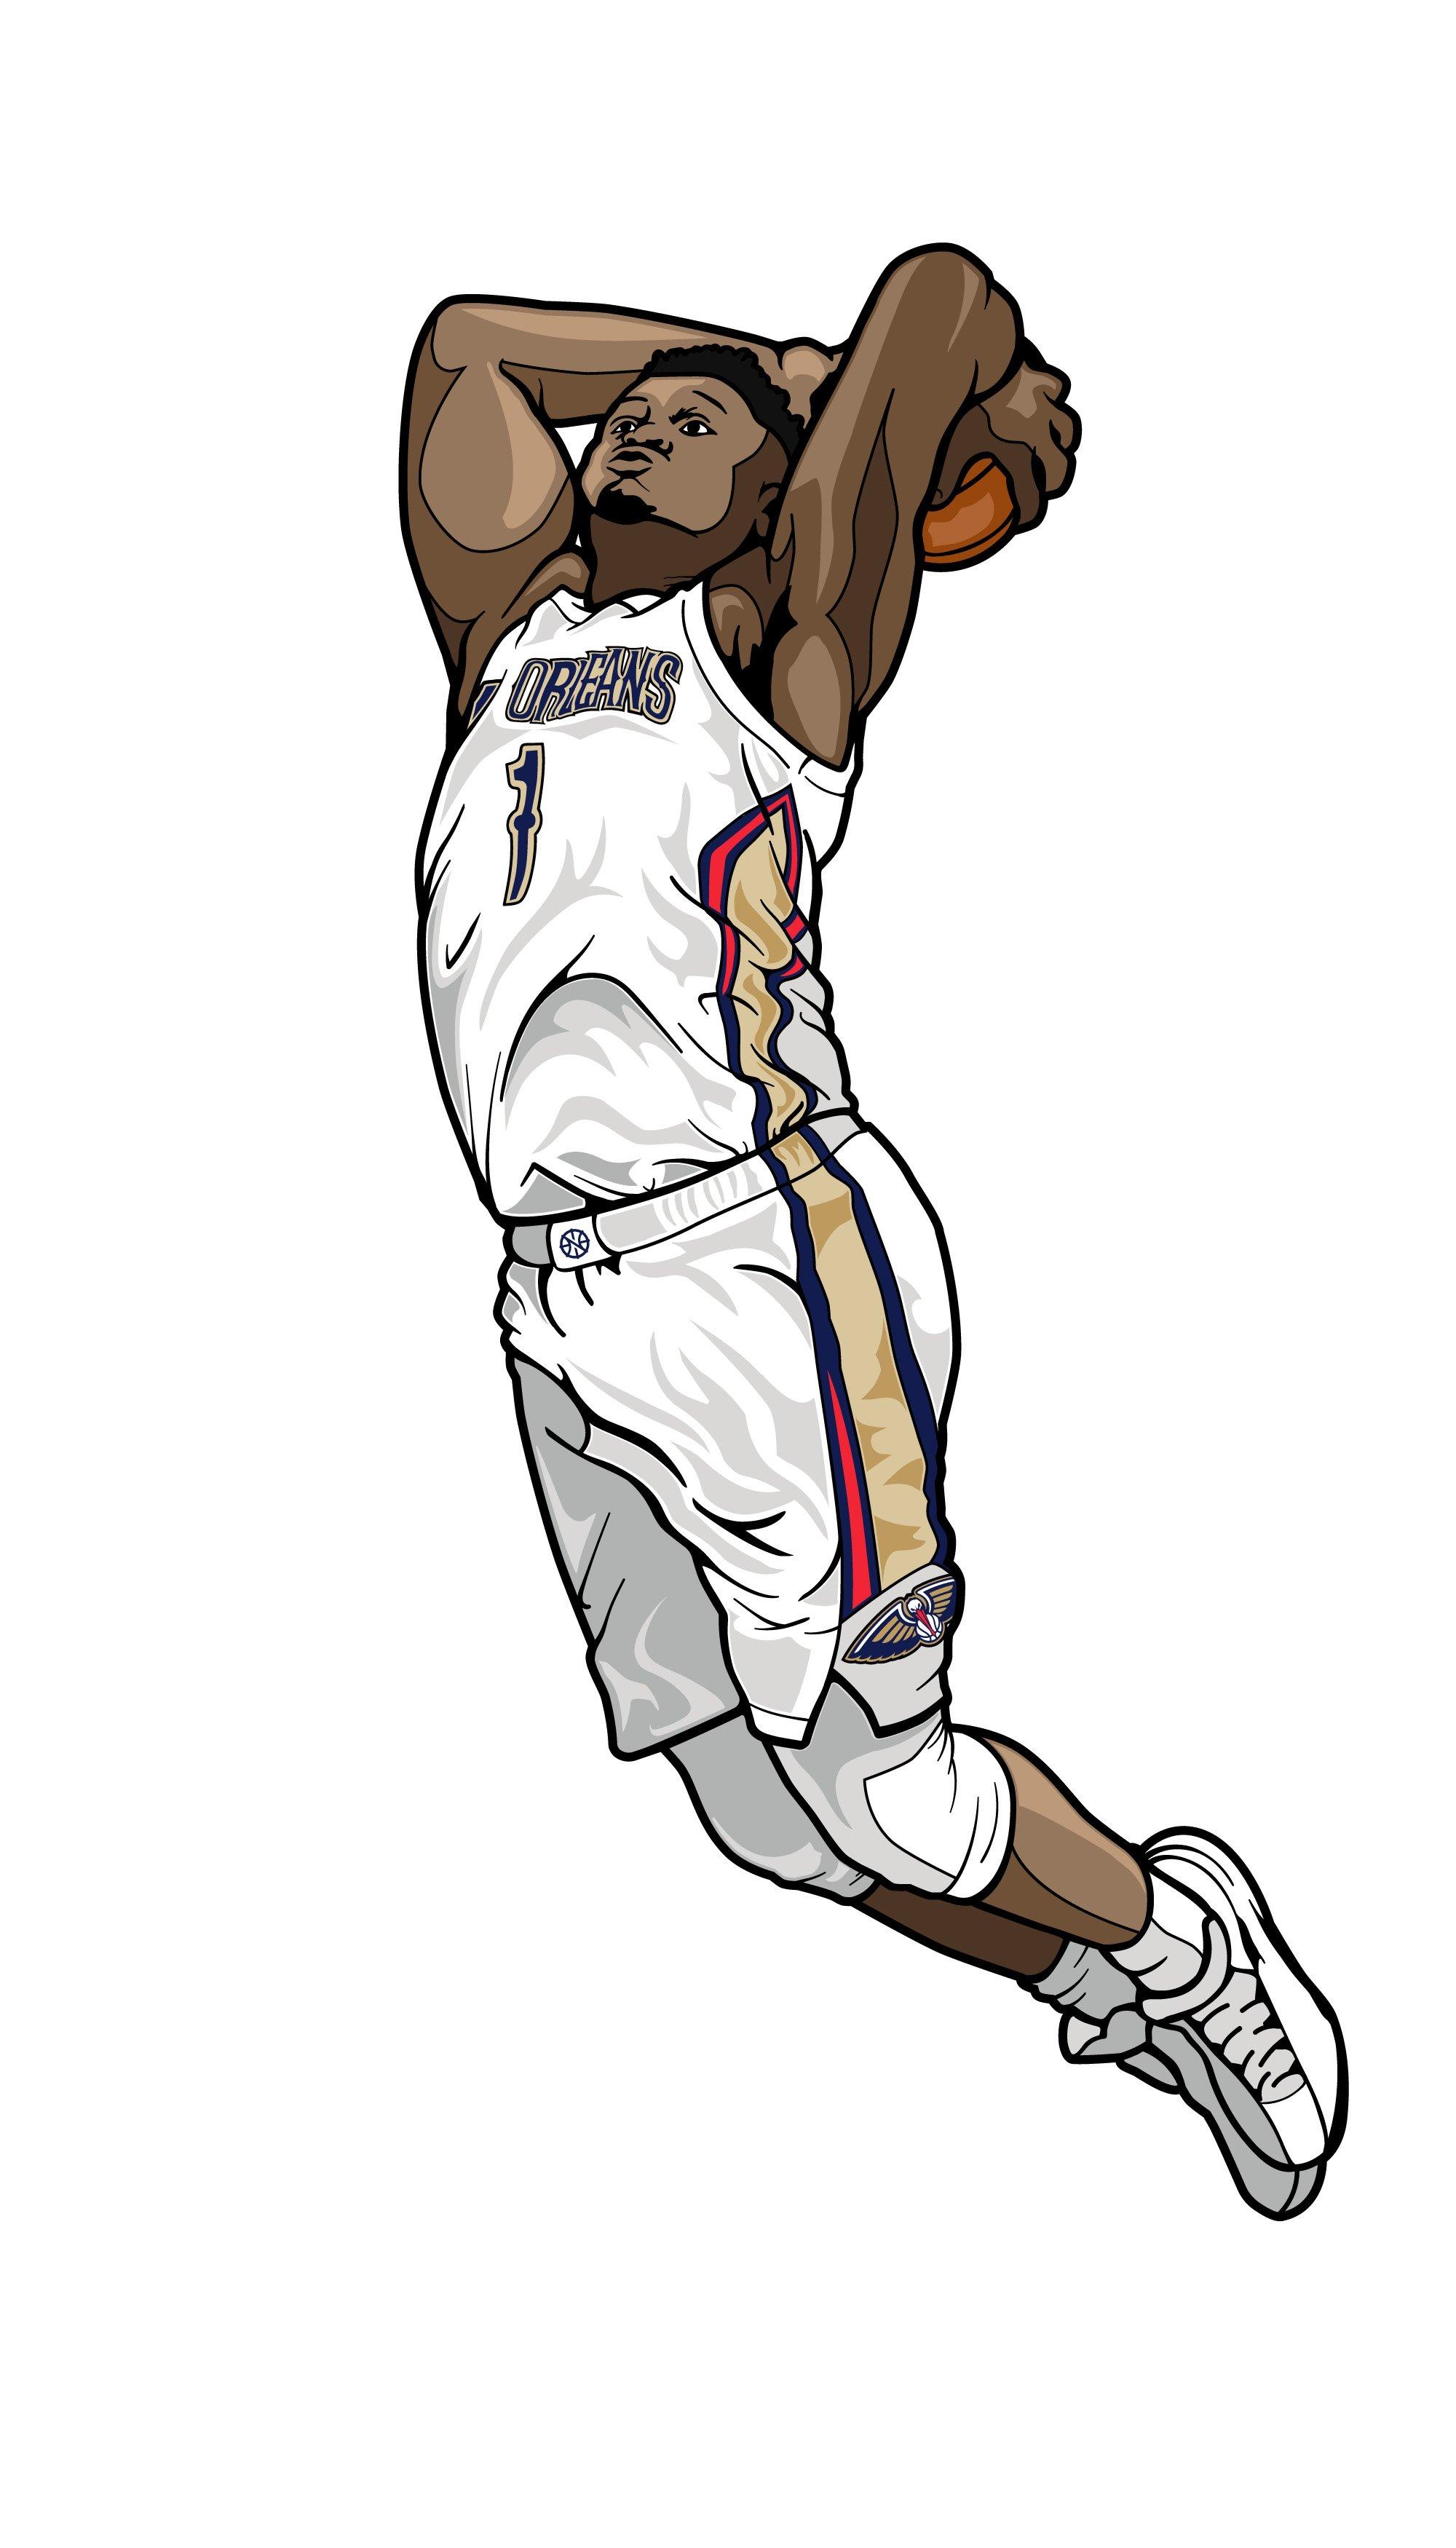 FiGPiN NBA New Orleans Pelicans Zion Williamson Collectible Enamel Pin